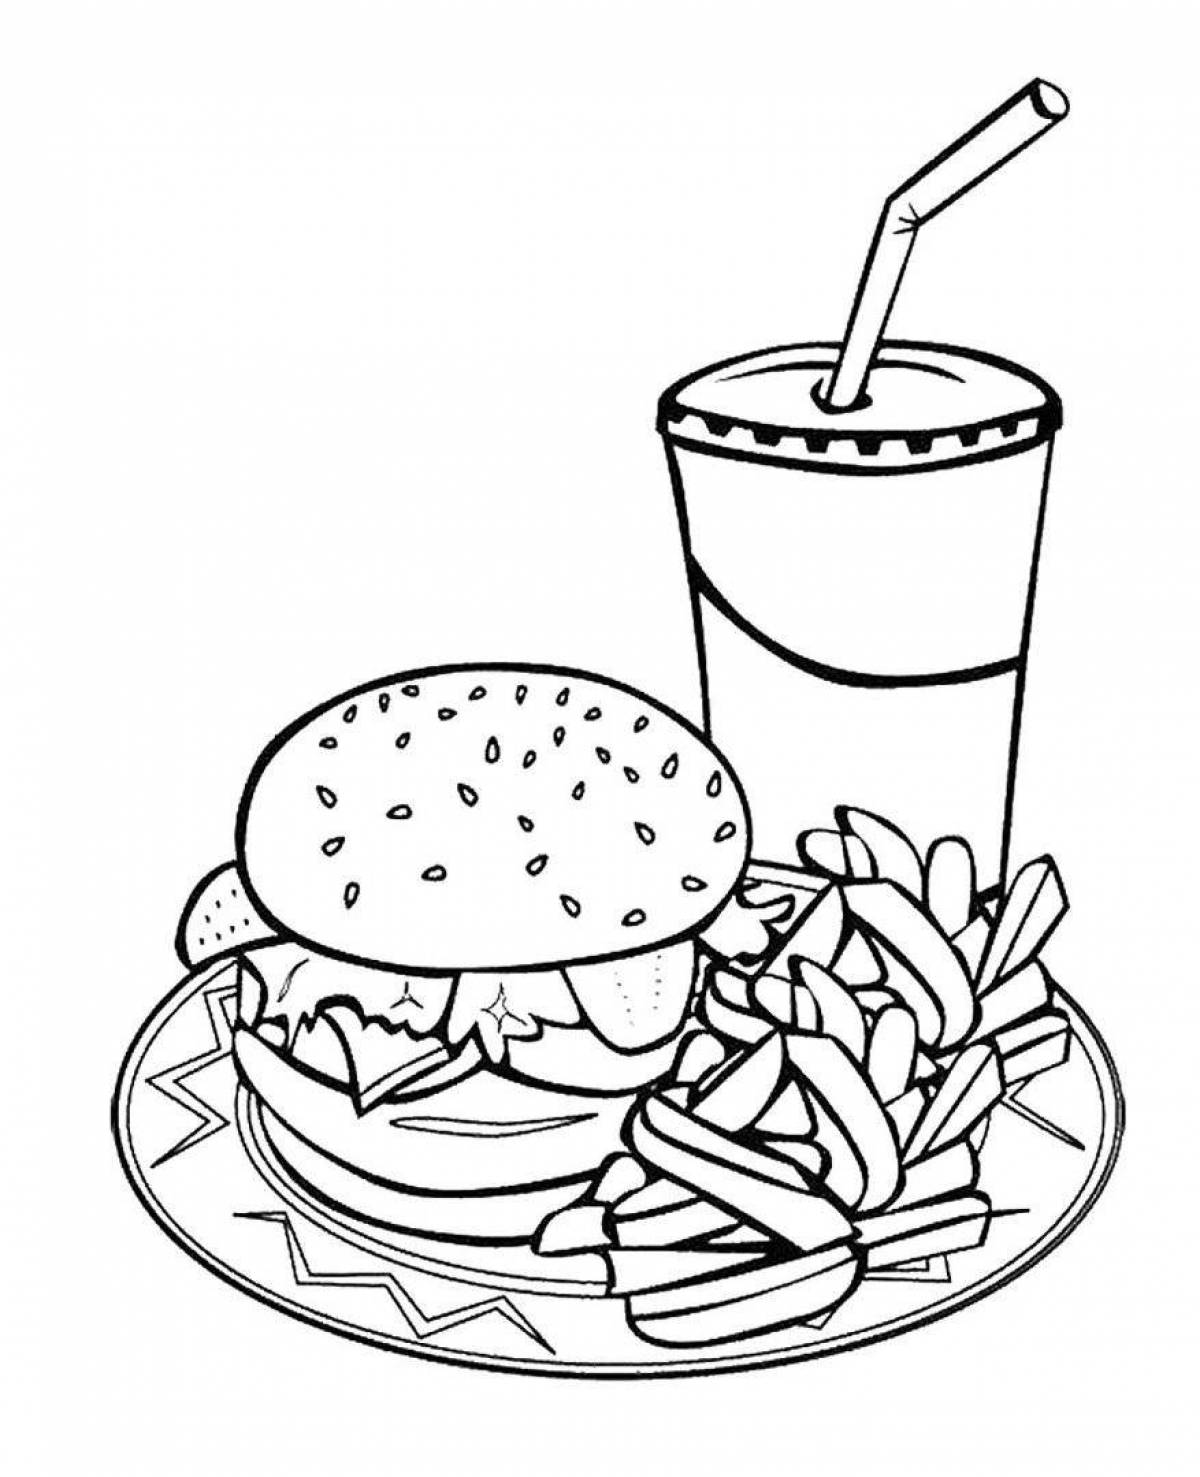 Charming burger coloring page